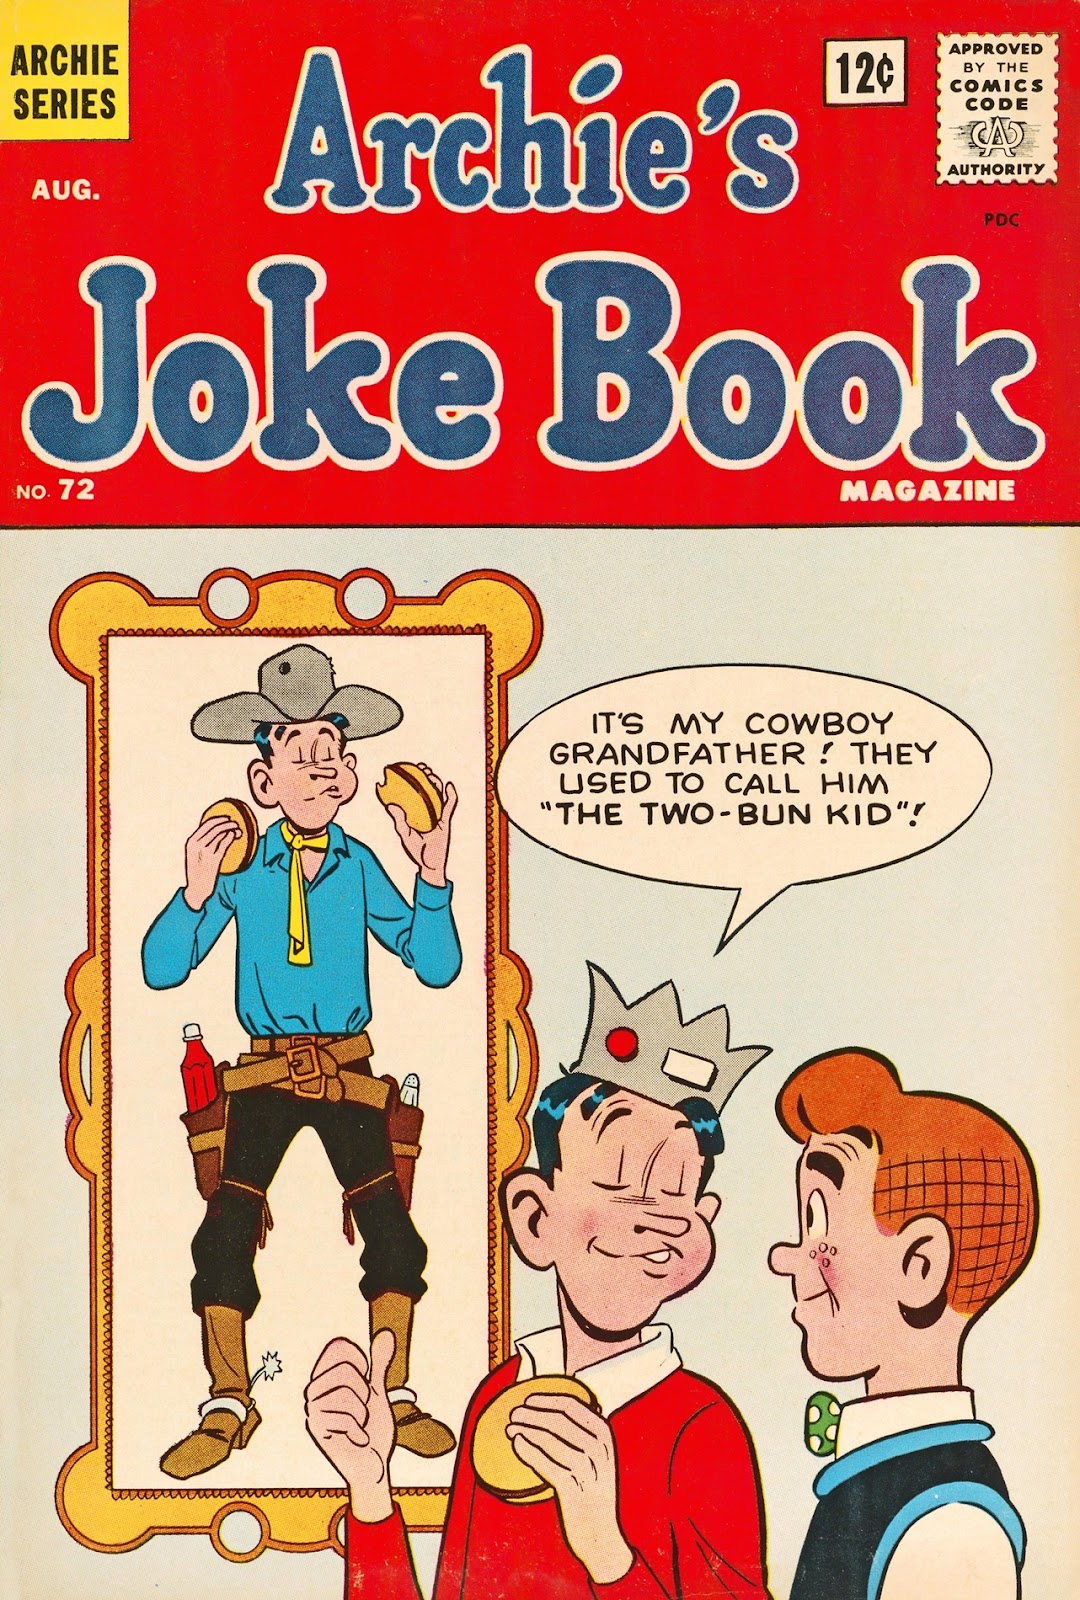 Archie's Joke Book Magazine issue 72 - Page 1